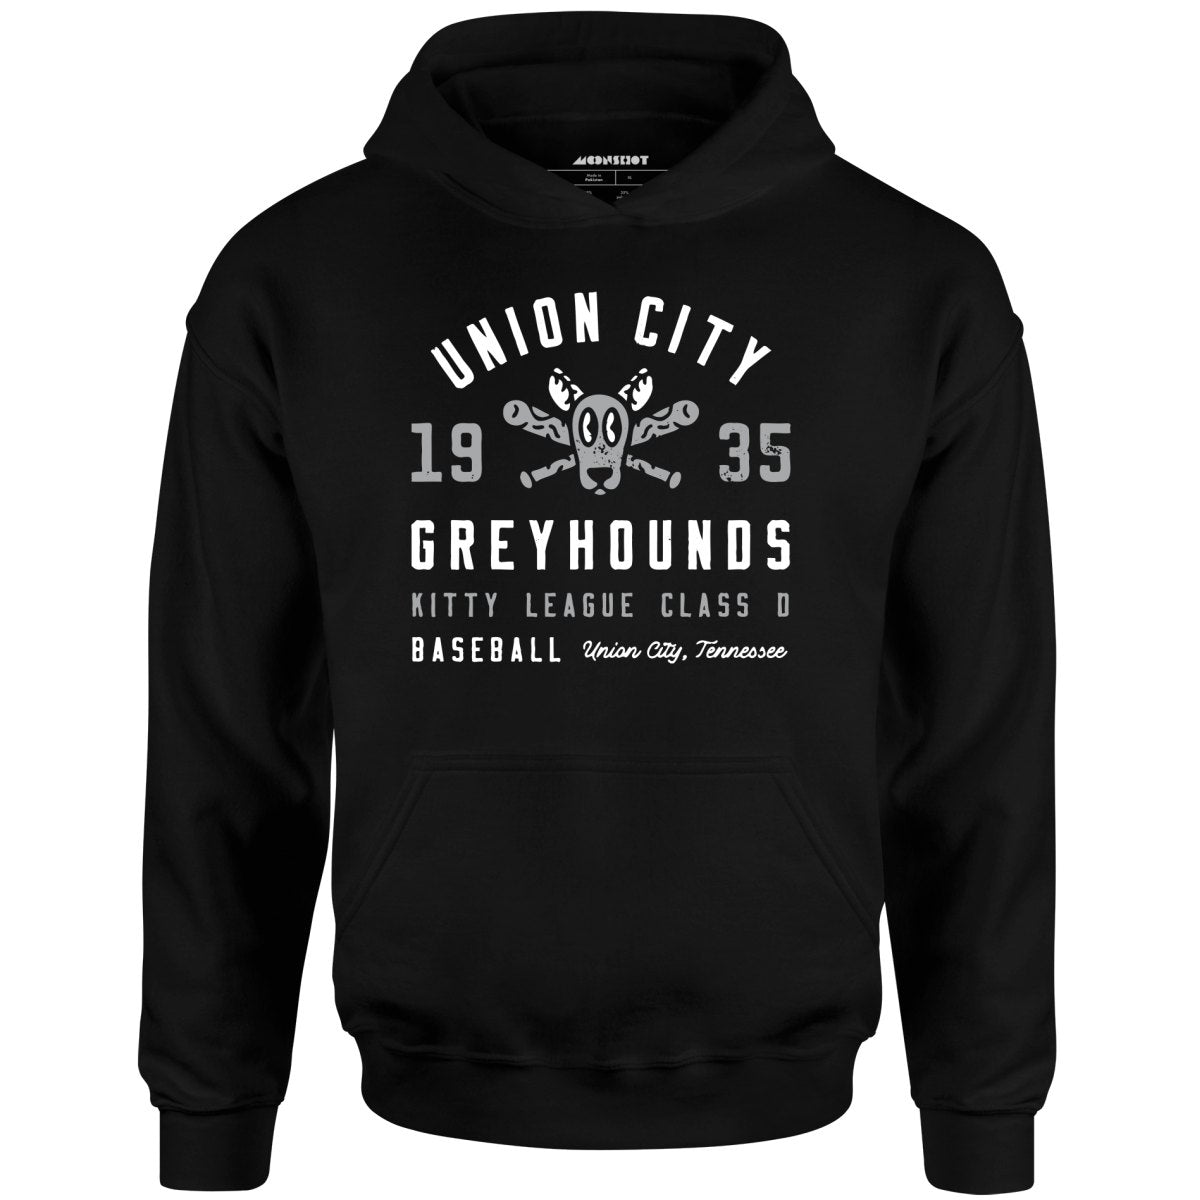 Union City Greyhounds - Tennessee - Vintage Defunct Baseball Teams - Unisex Hoodie